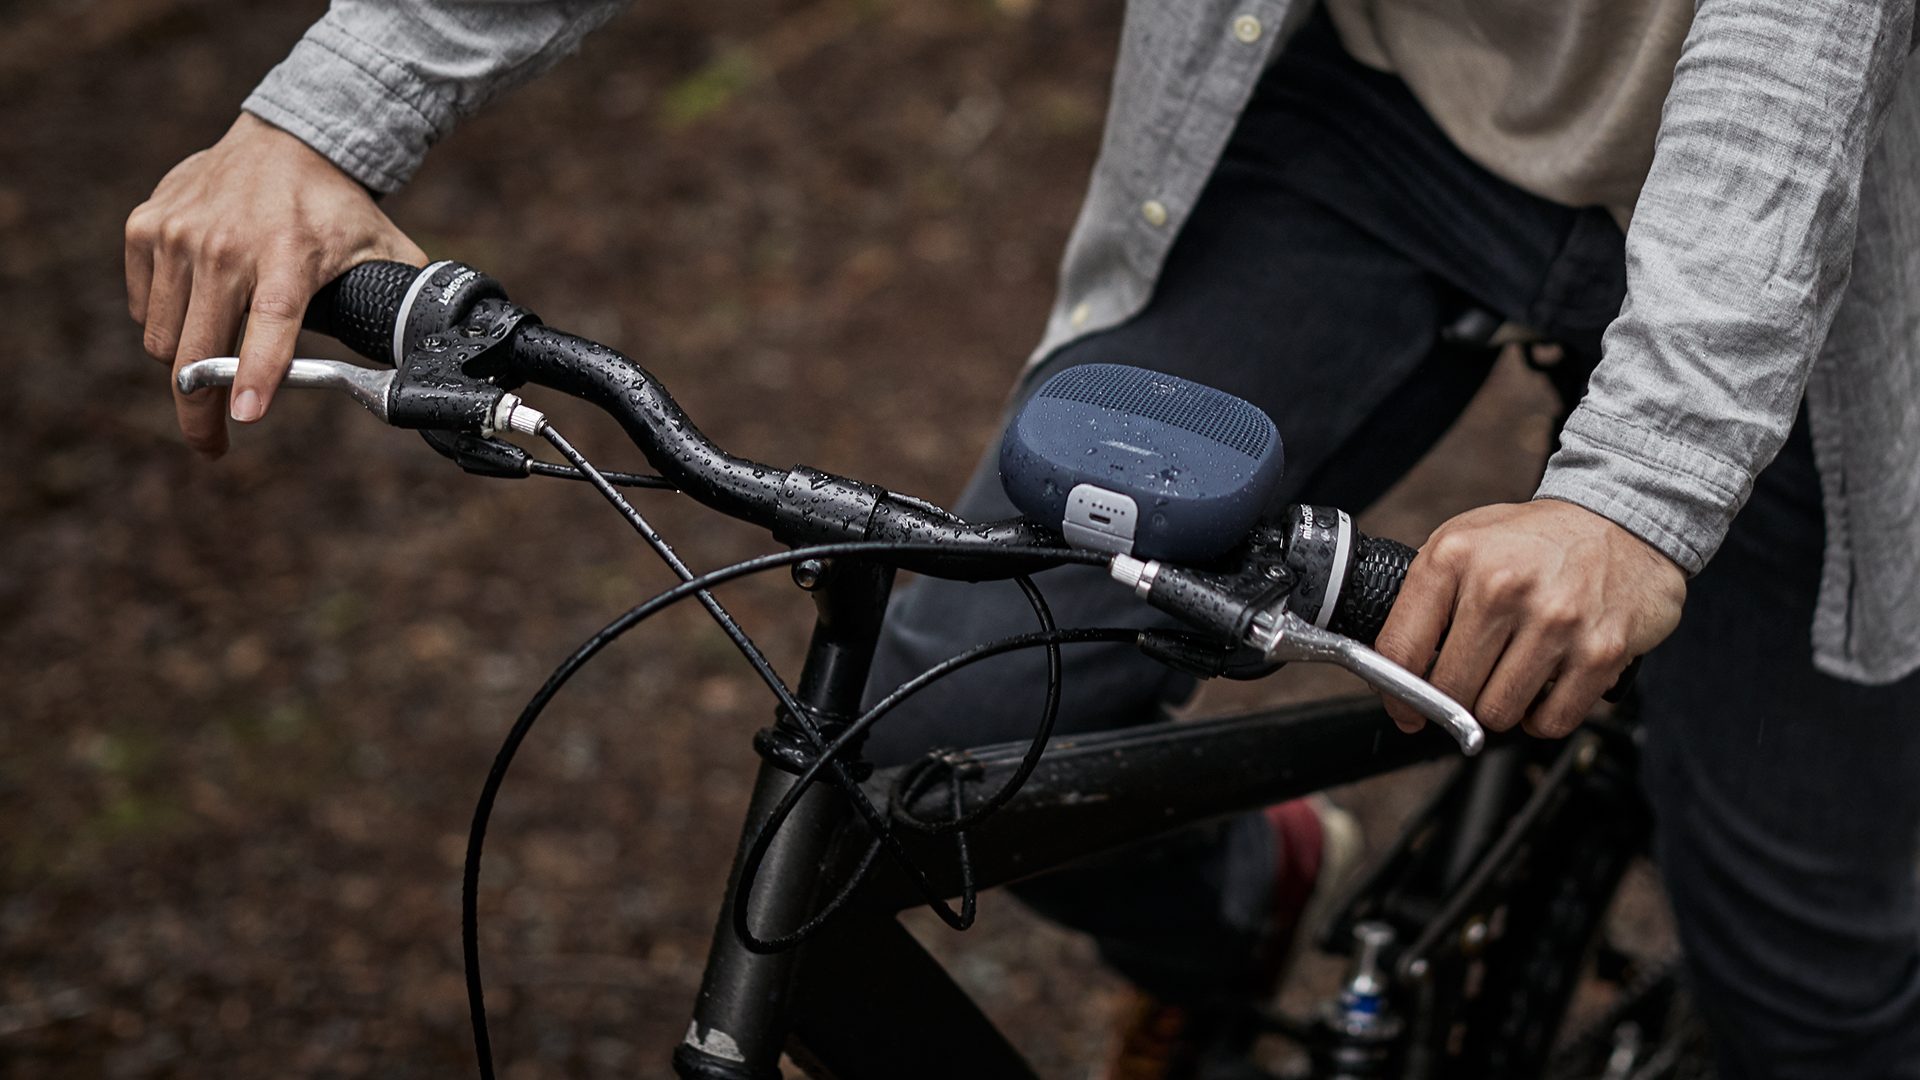 Bose Soundlink Micro Bluetooth Speaker Bike